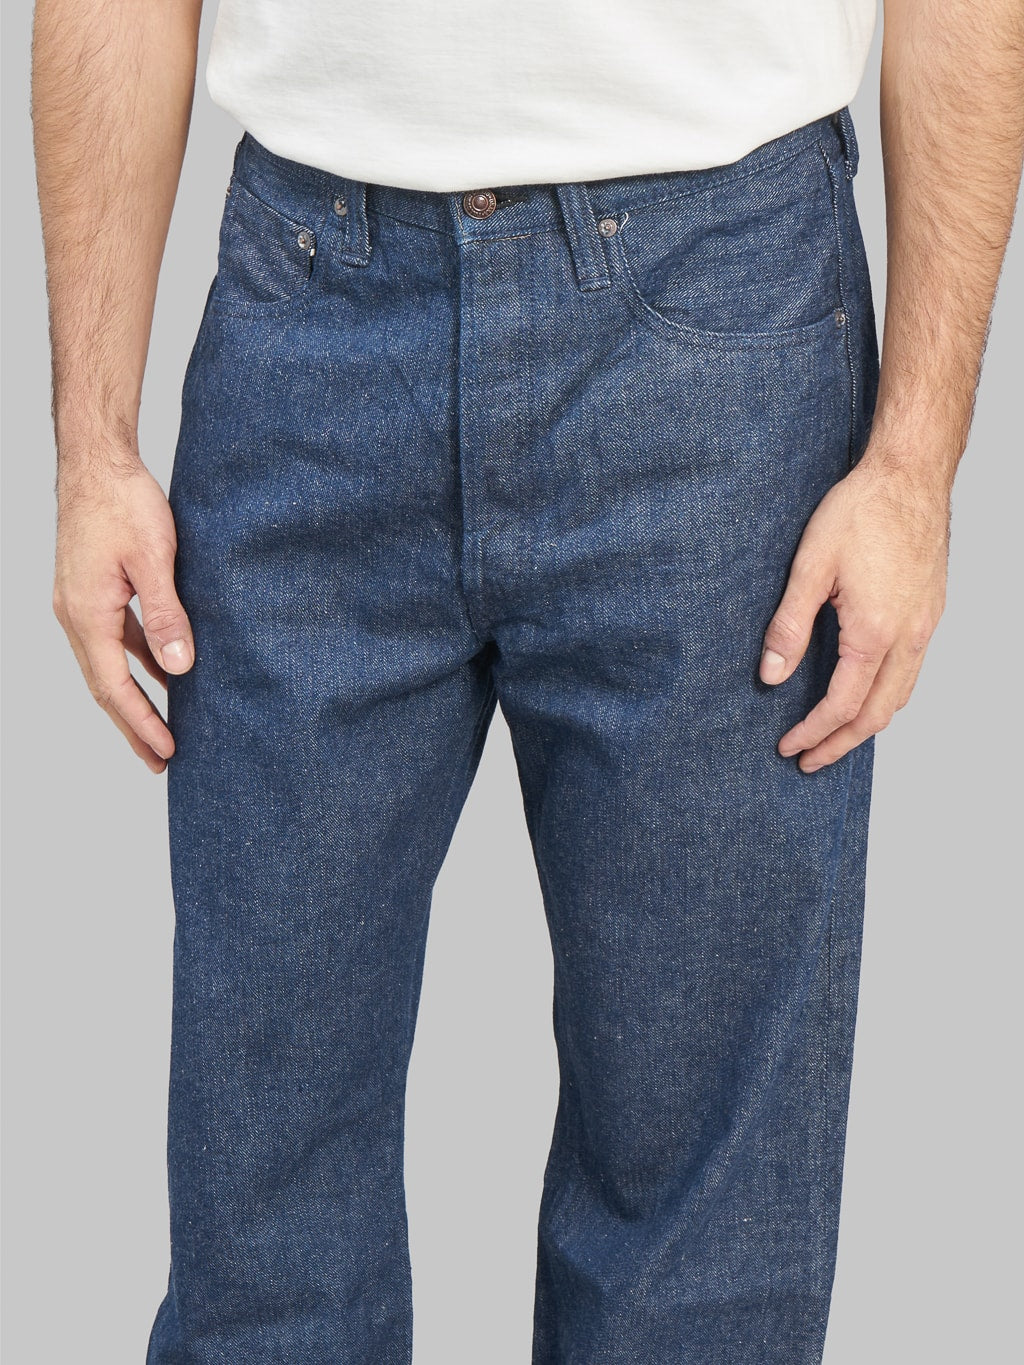 fullcount 1121 duke original selvedge denim super wide jeans waist